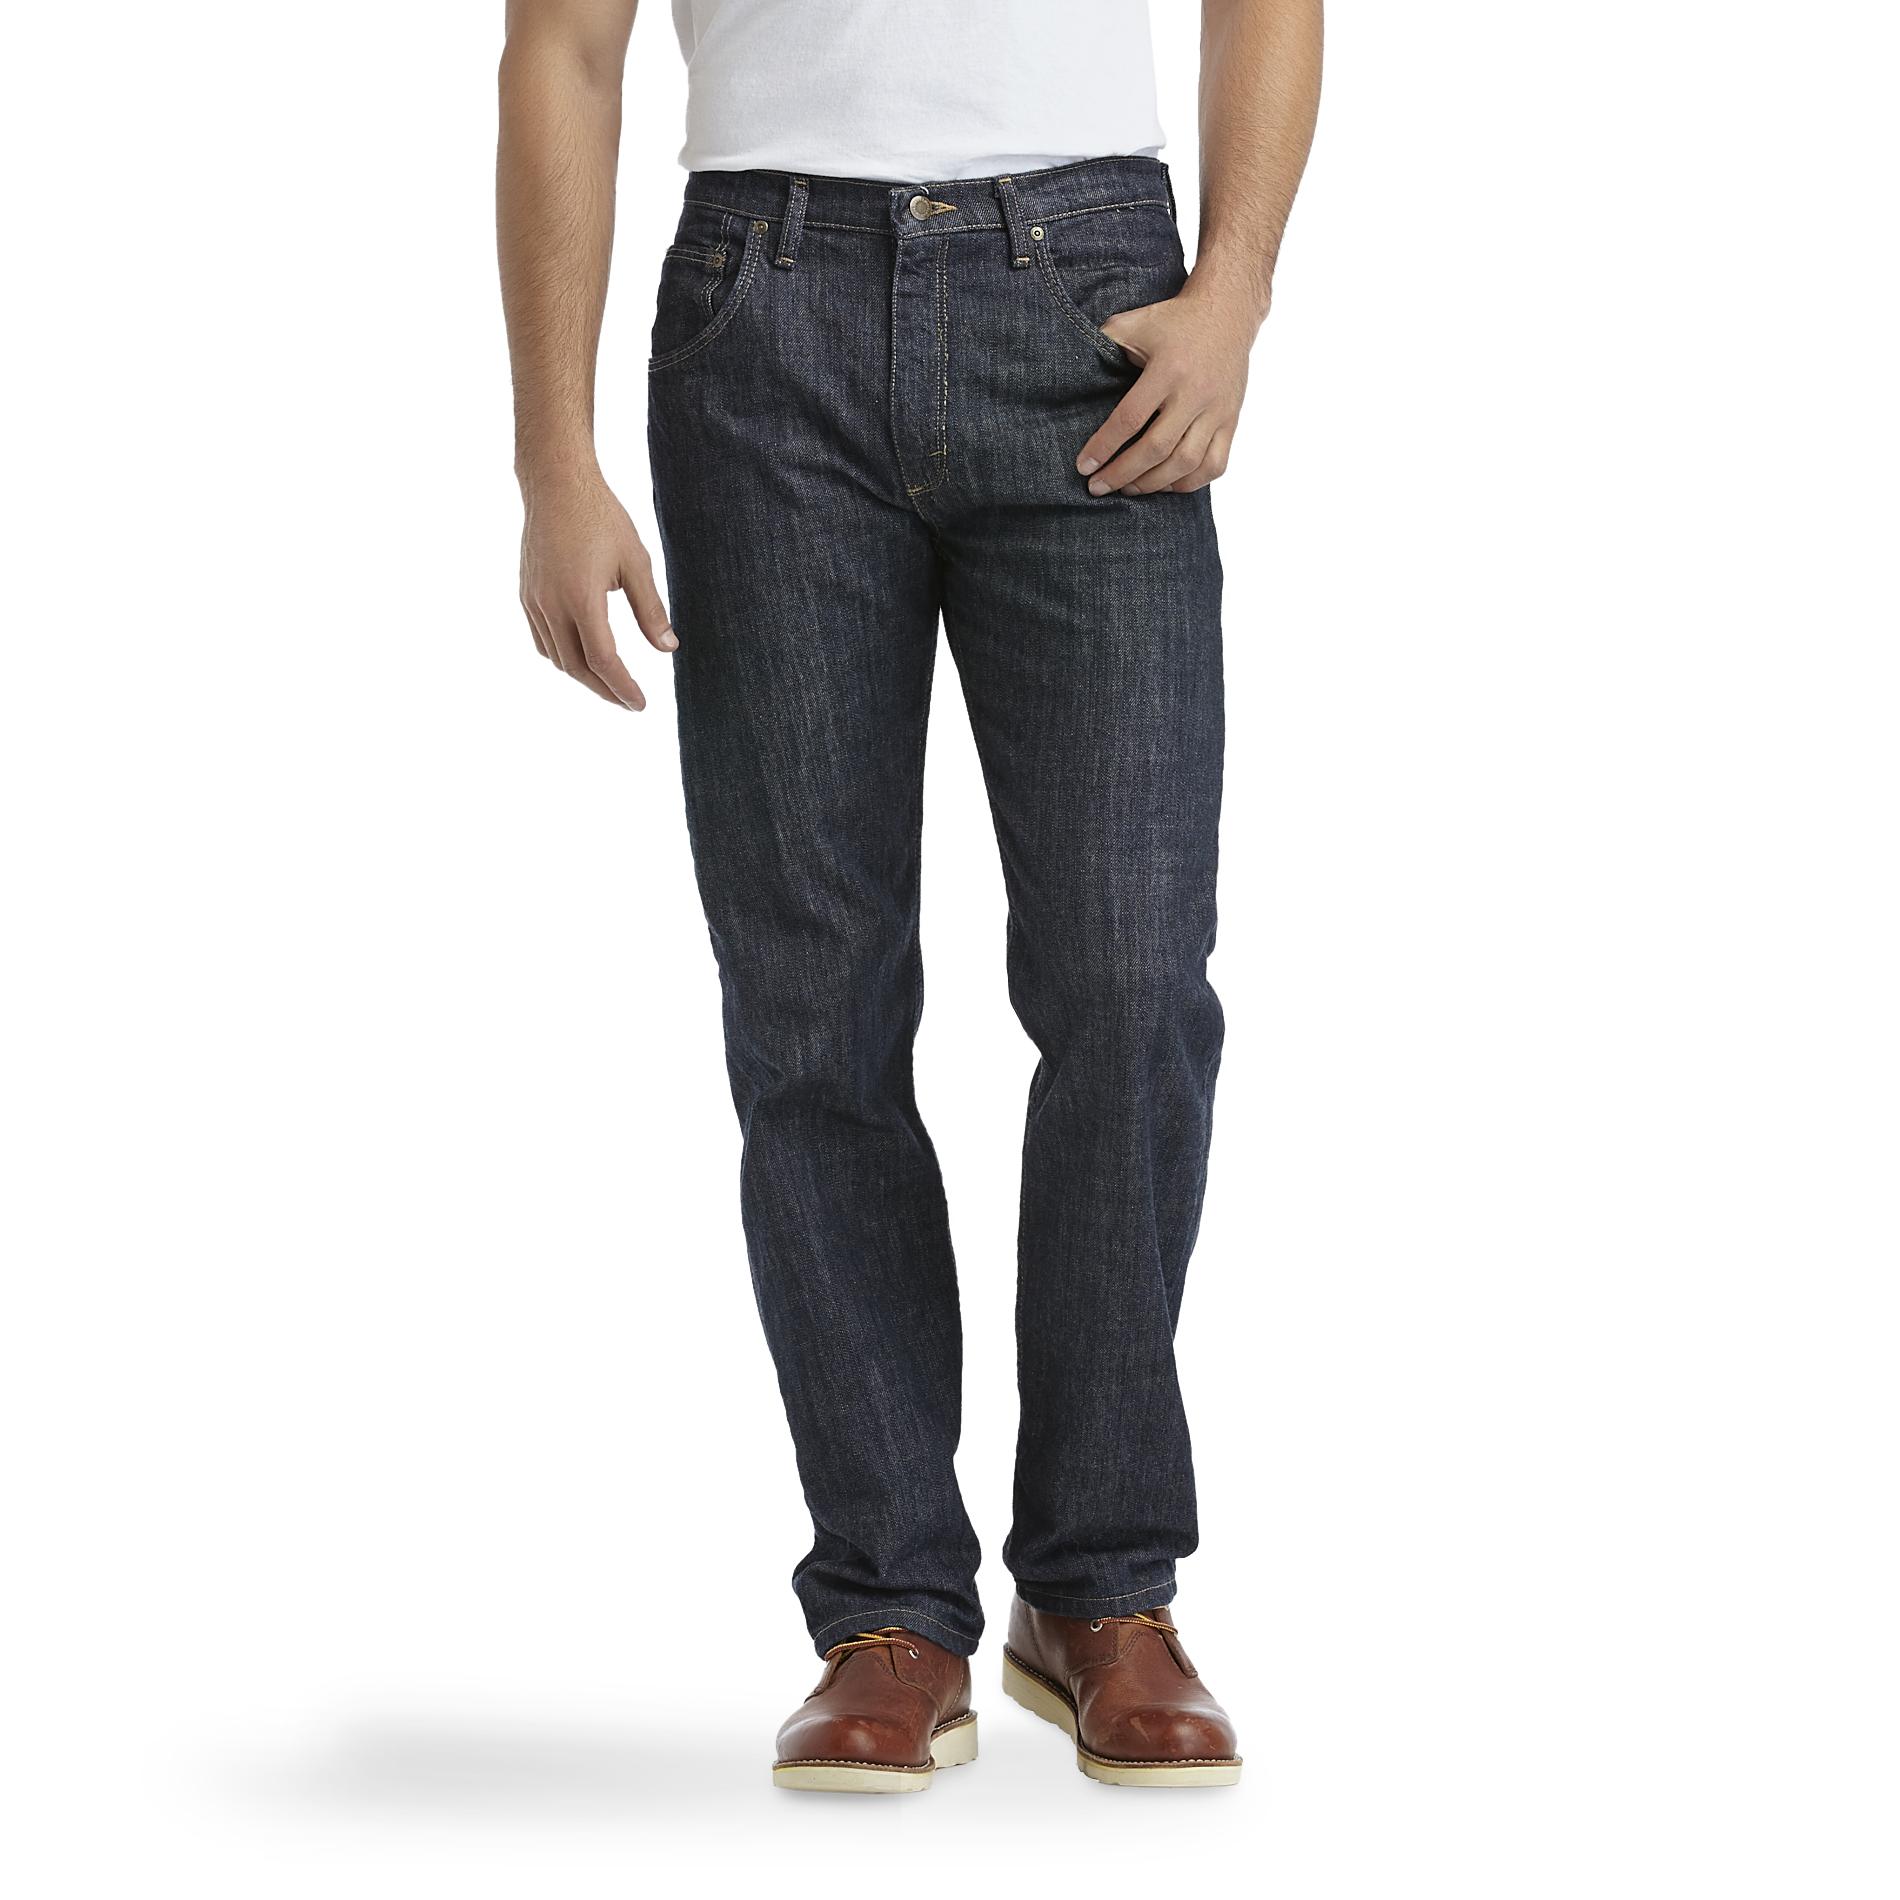 Men's Premium Denim Jeans - Relaxed Fit